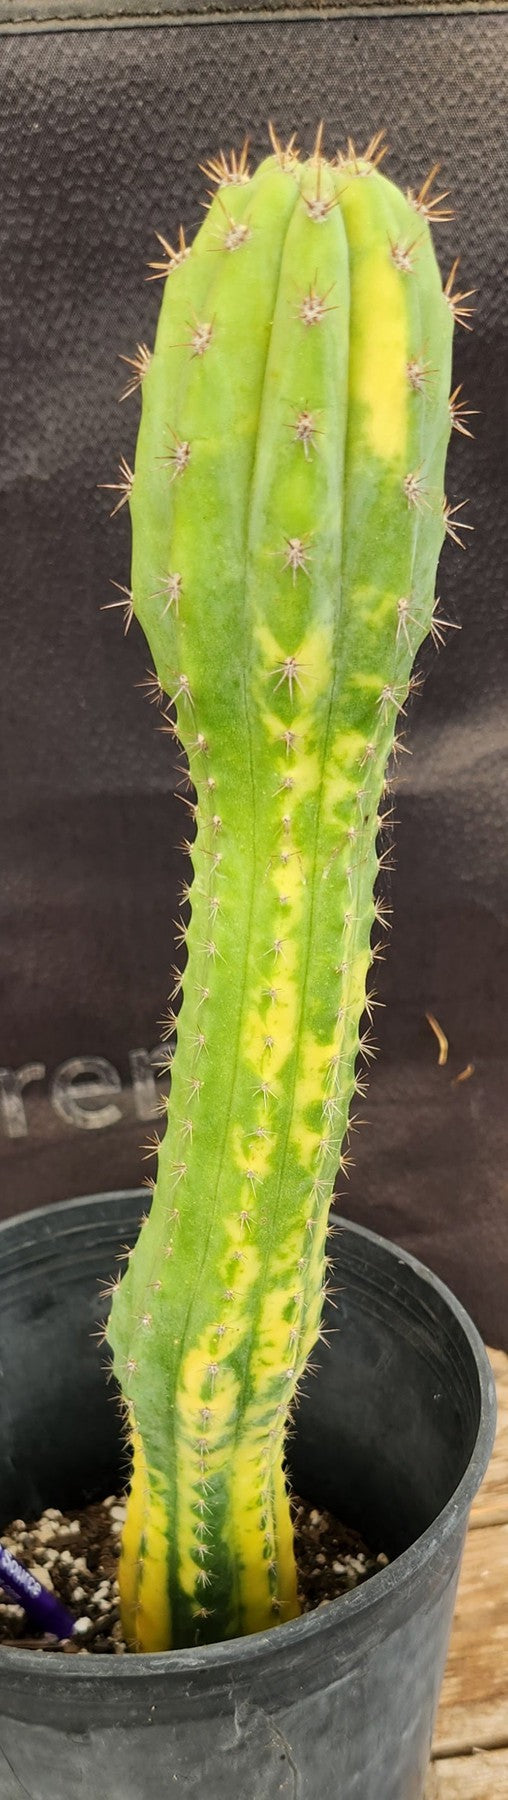 #EC37 EXACT Trichocereus Hybrid Pachanoi China Gold Variegated Cactus 13.5"